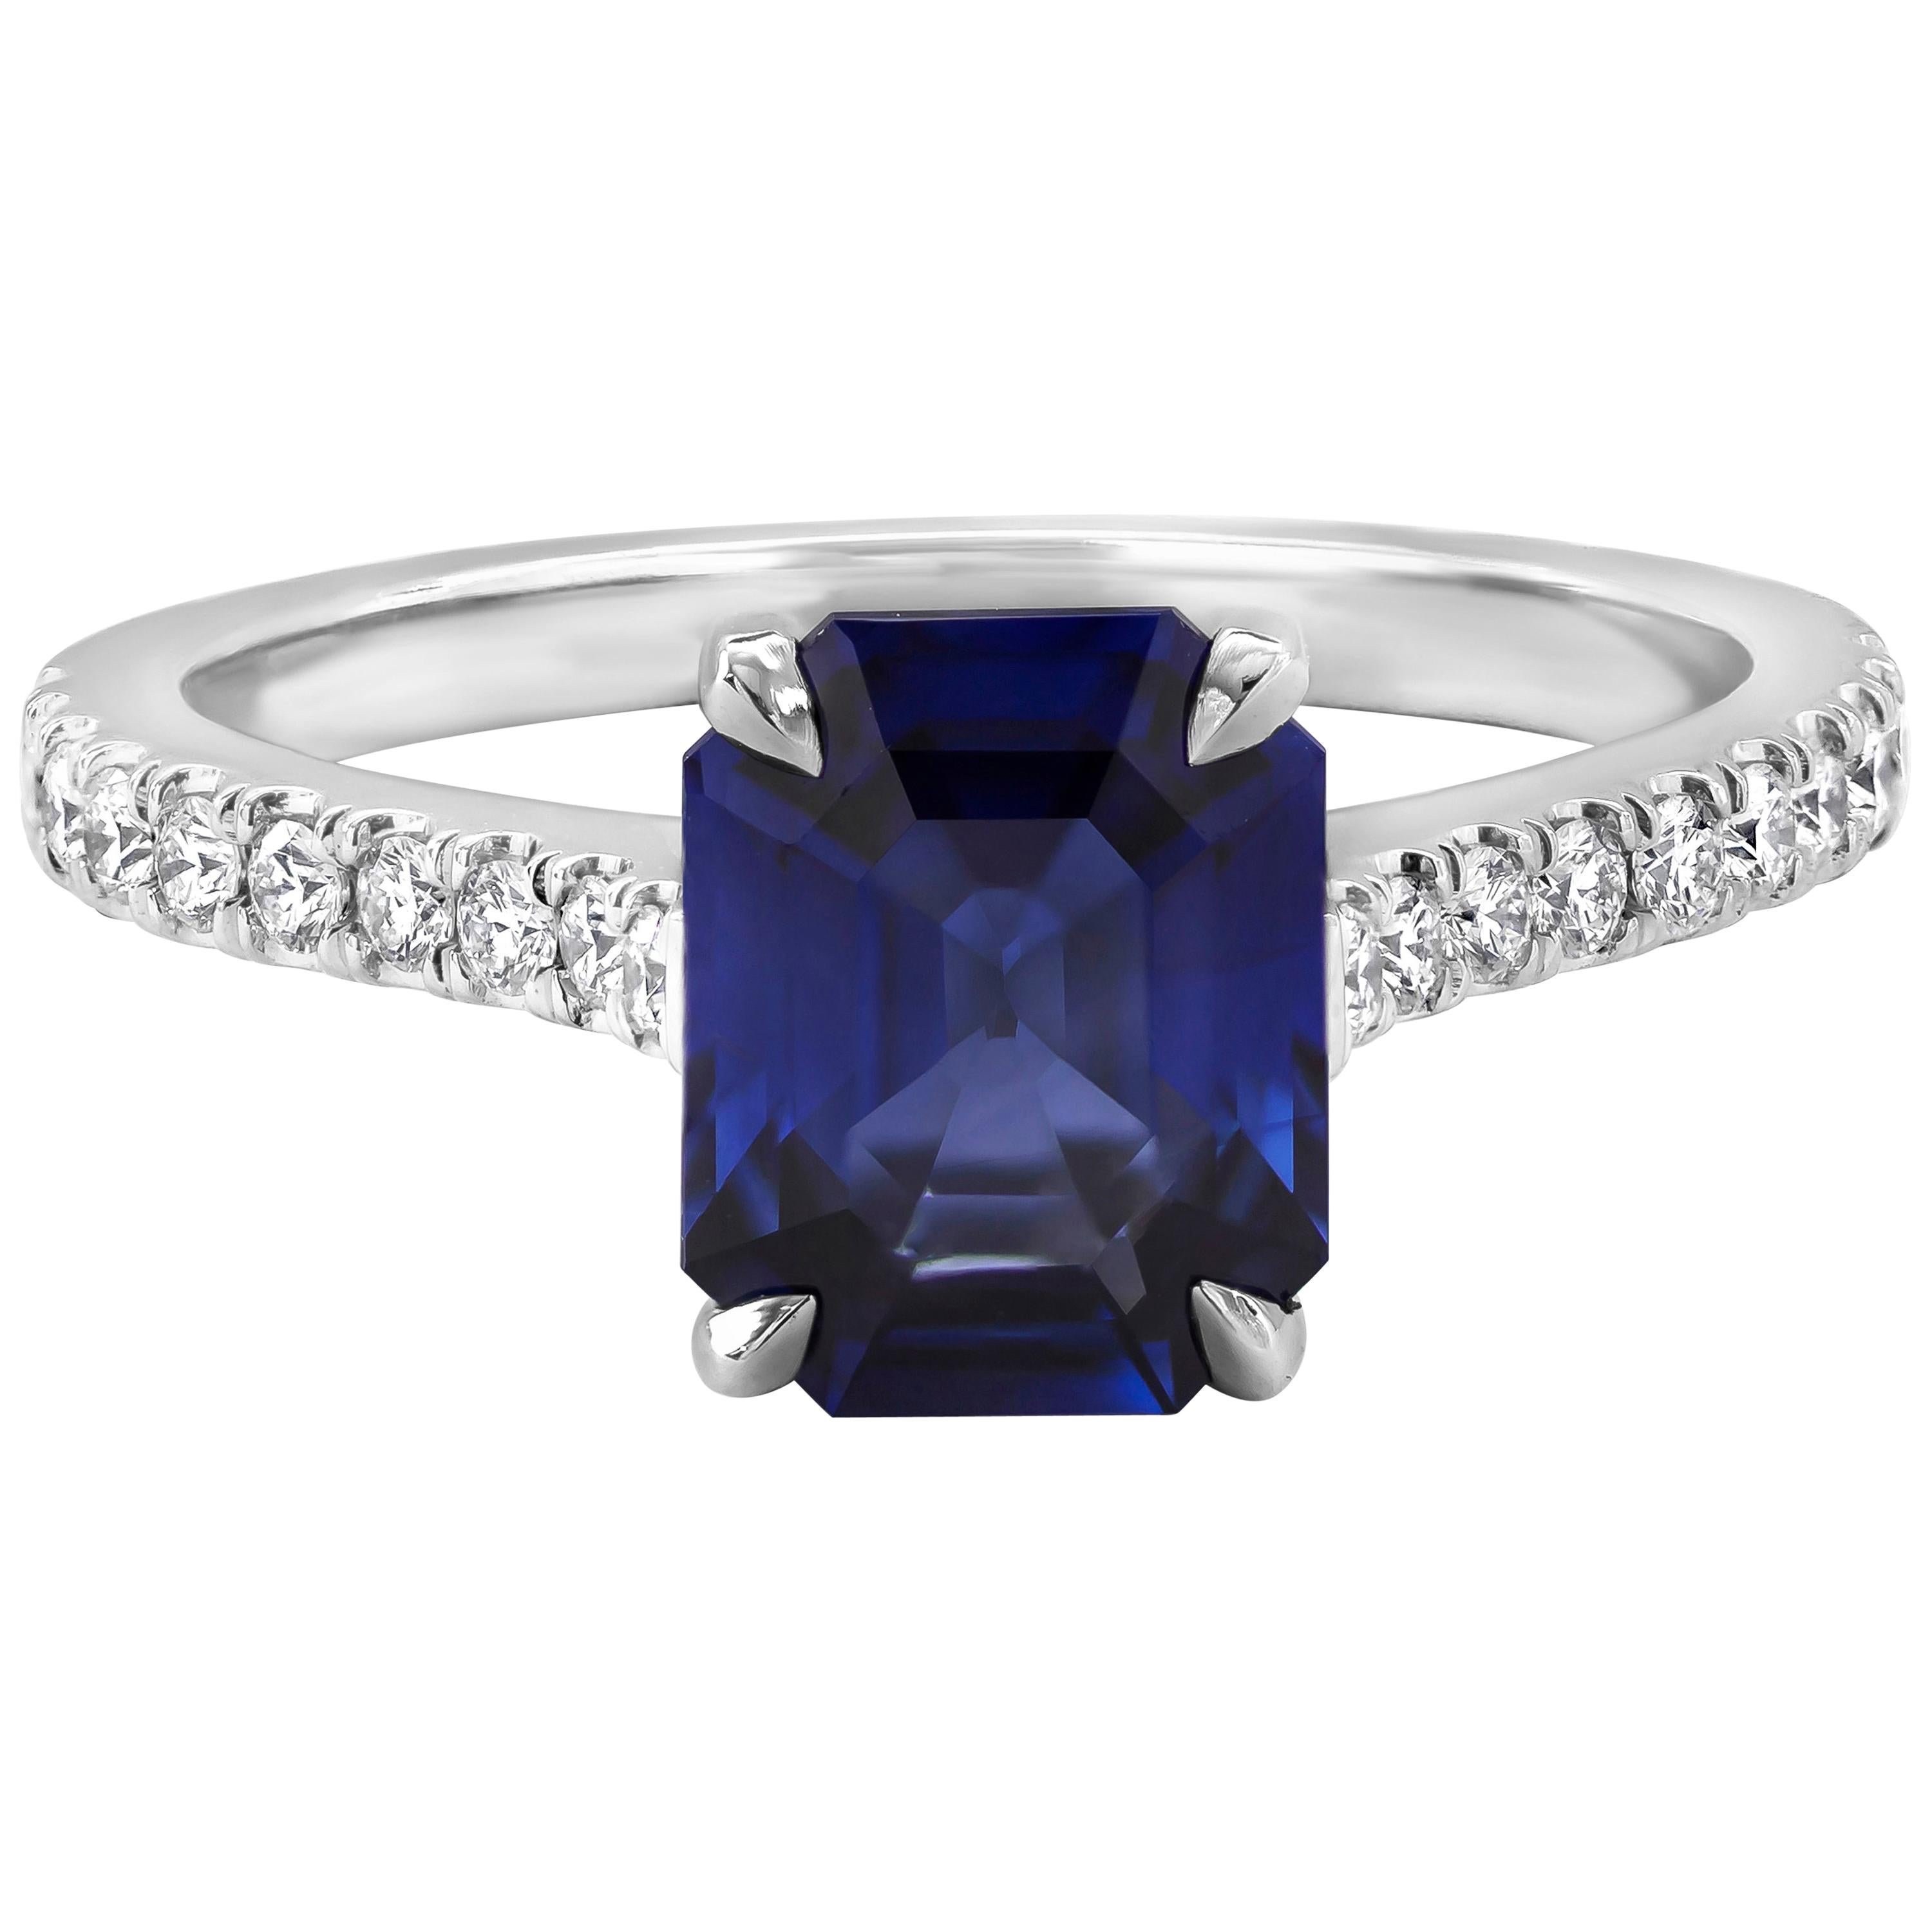 Roman Malakov 2.22 Carat Emerald Cut Blue Sapphire and Diamond Engagement Ring